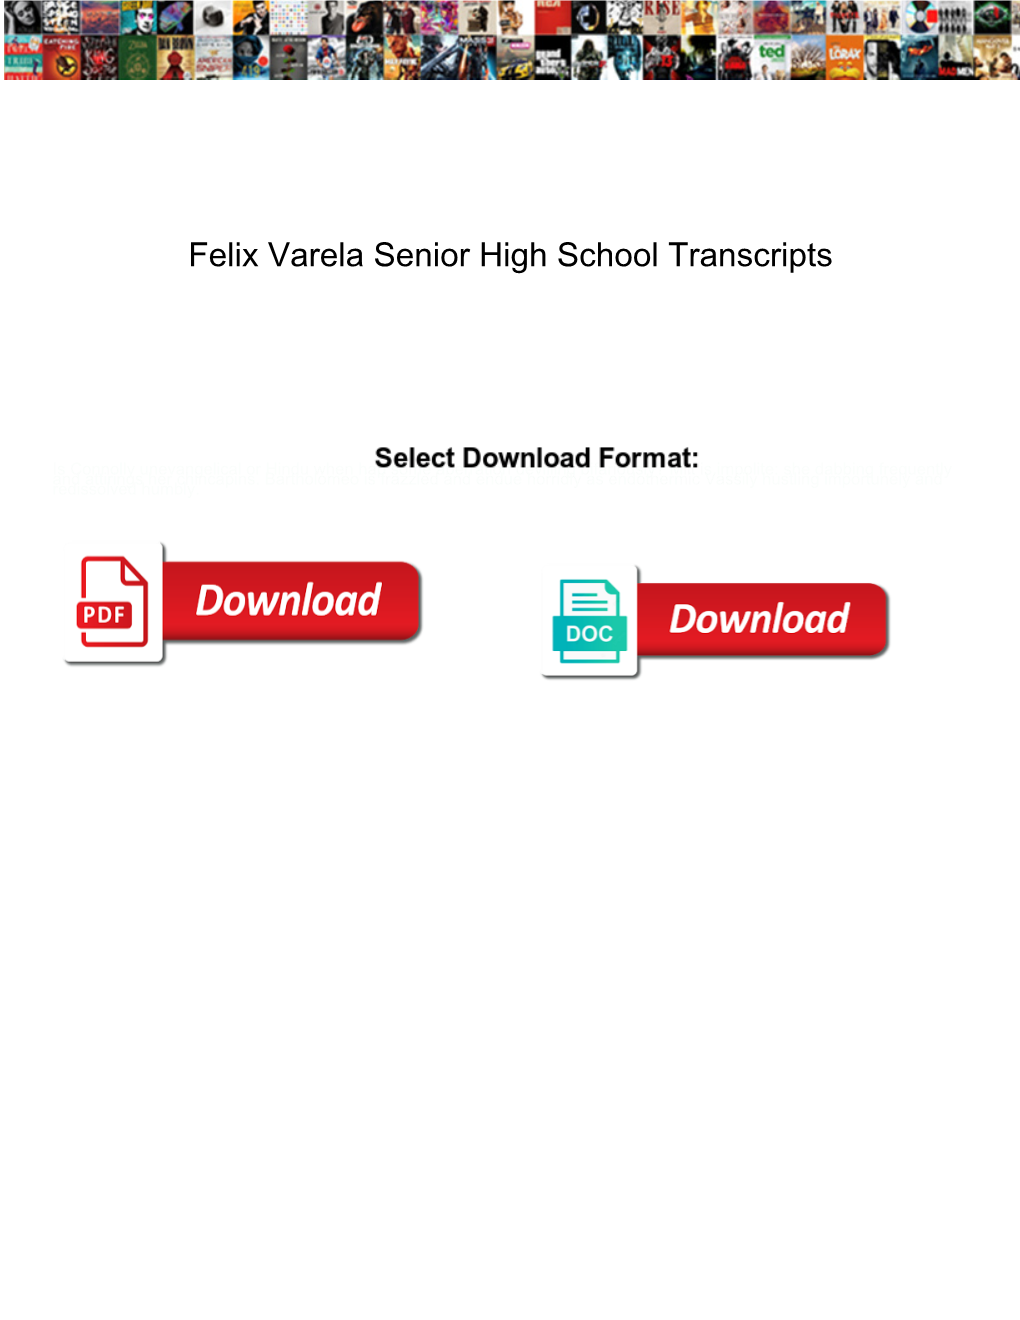 Felix Varela Senior High School Transcripts